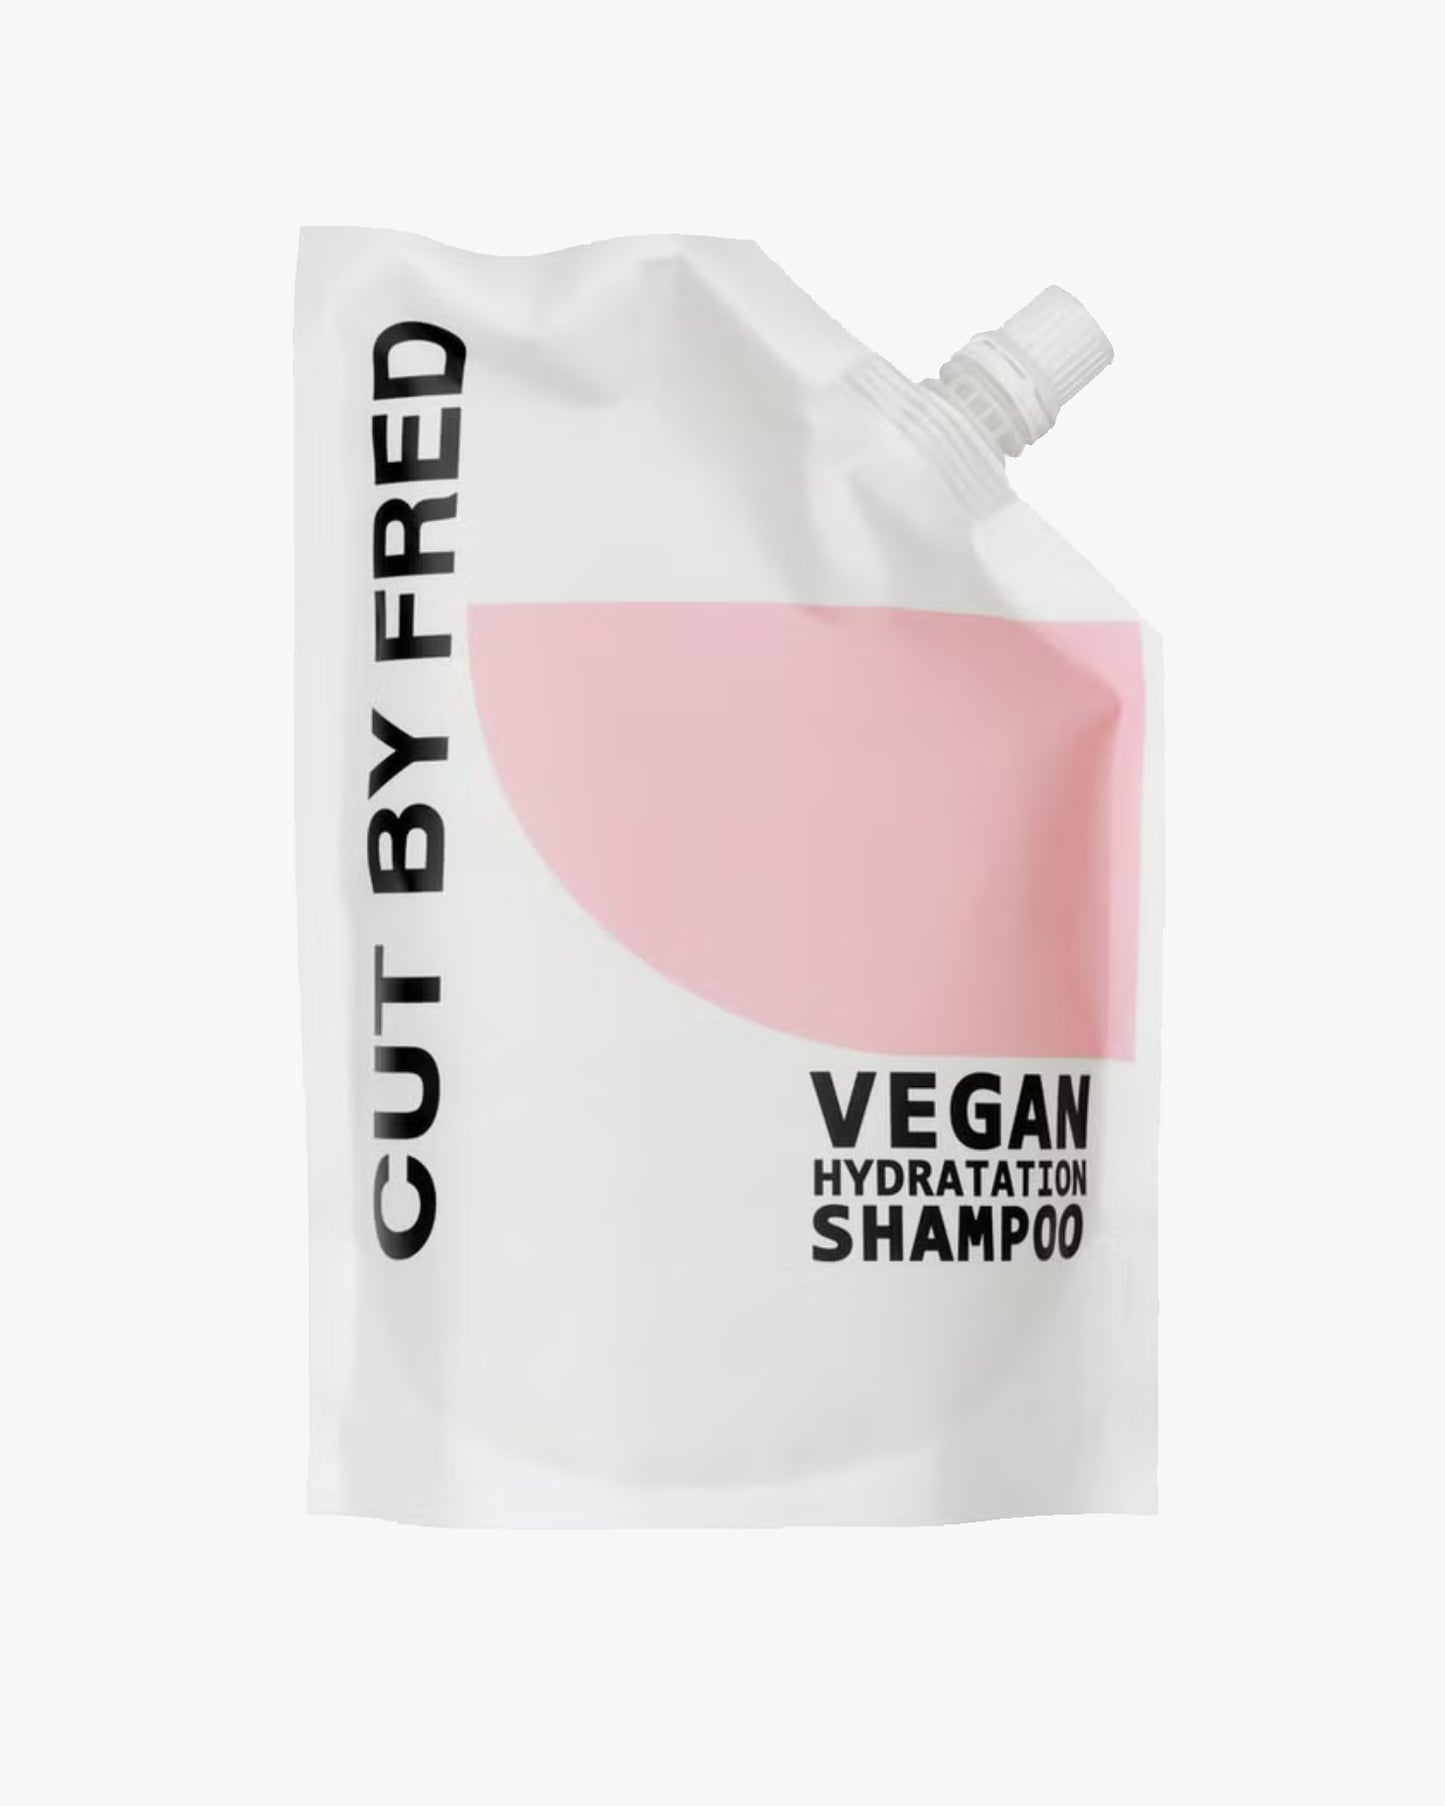 Vegan Hydration Shampoo